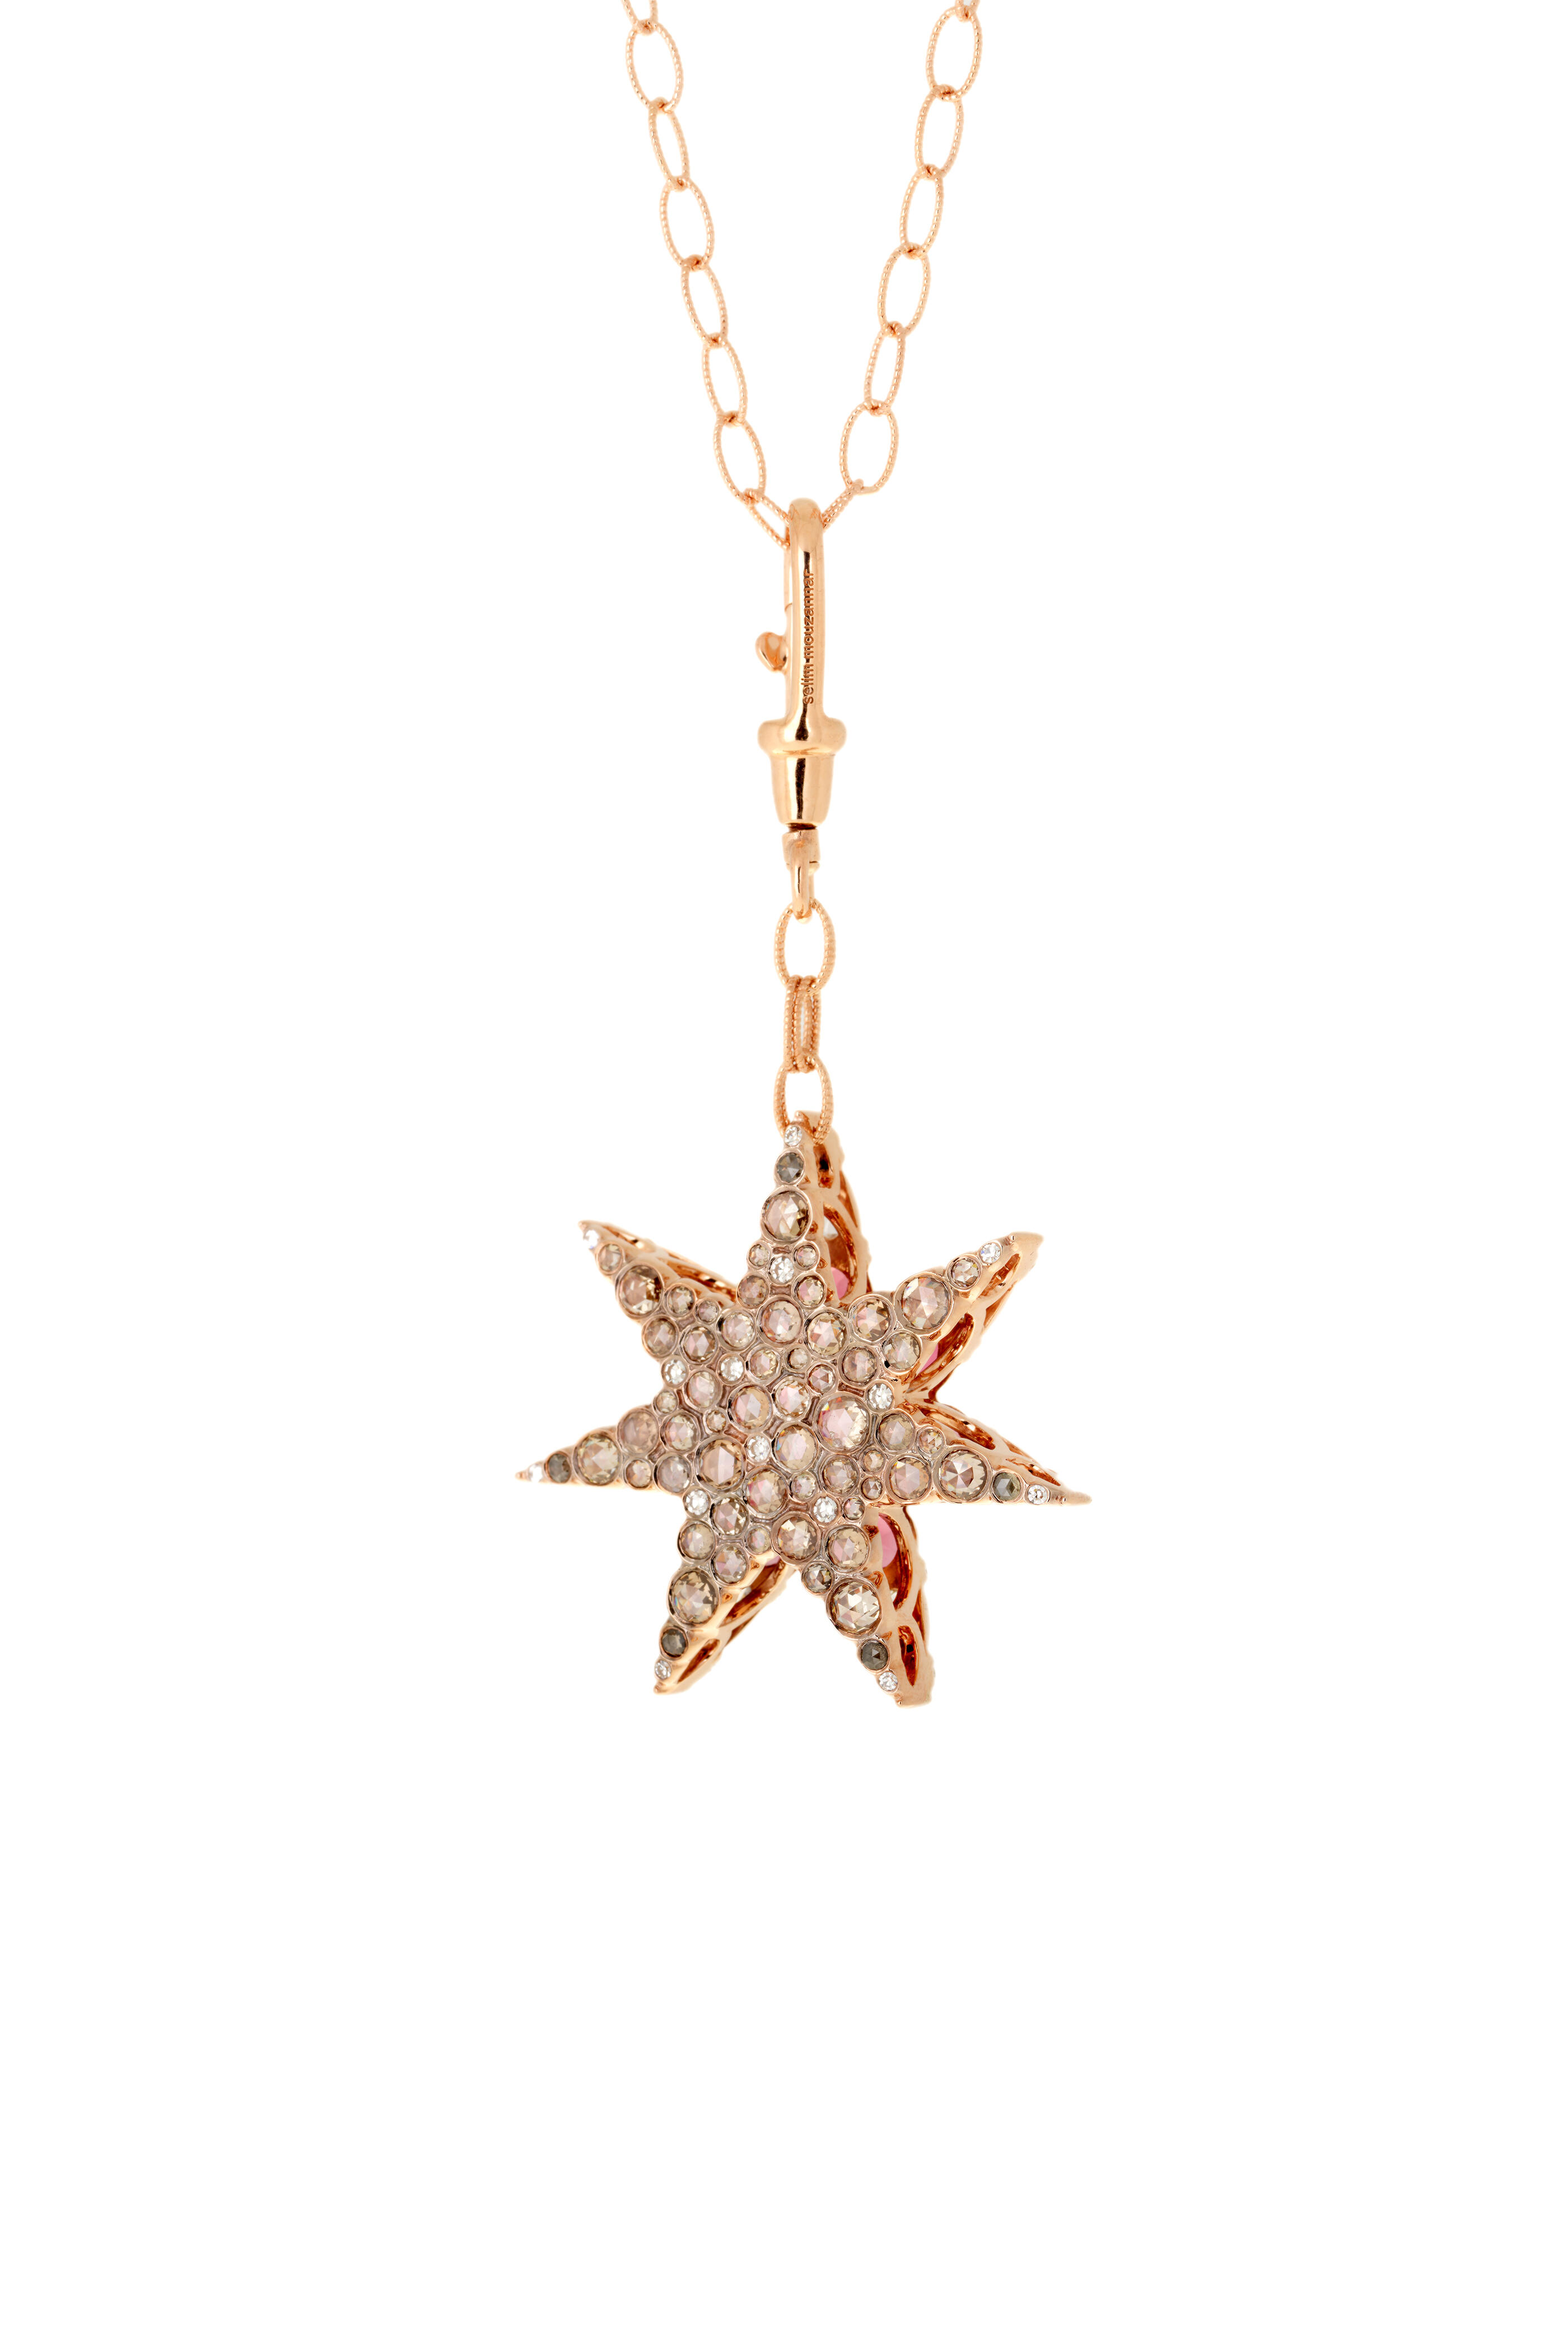 Selim Mouzannar - Diamond & Pink Tourmaline Star Bracelet